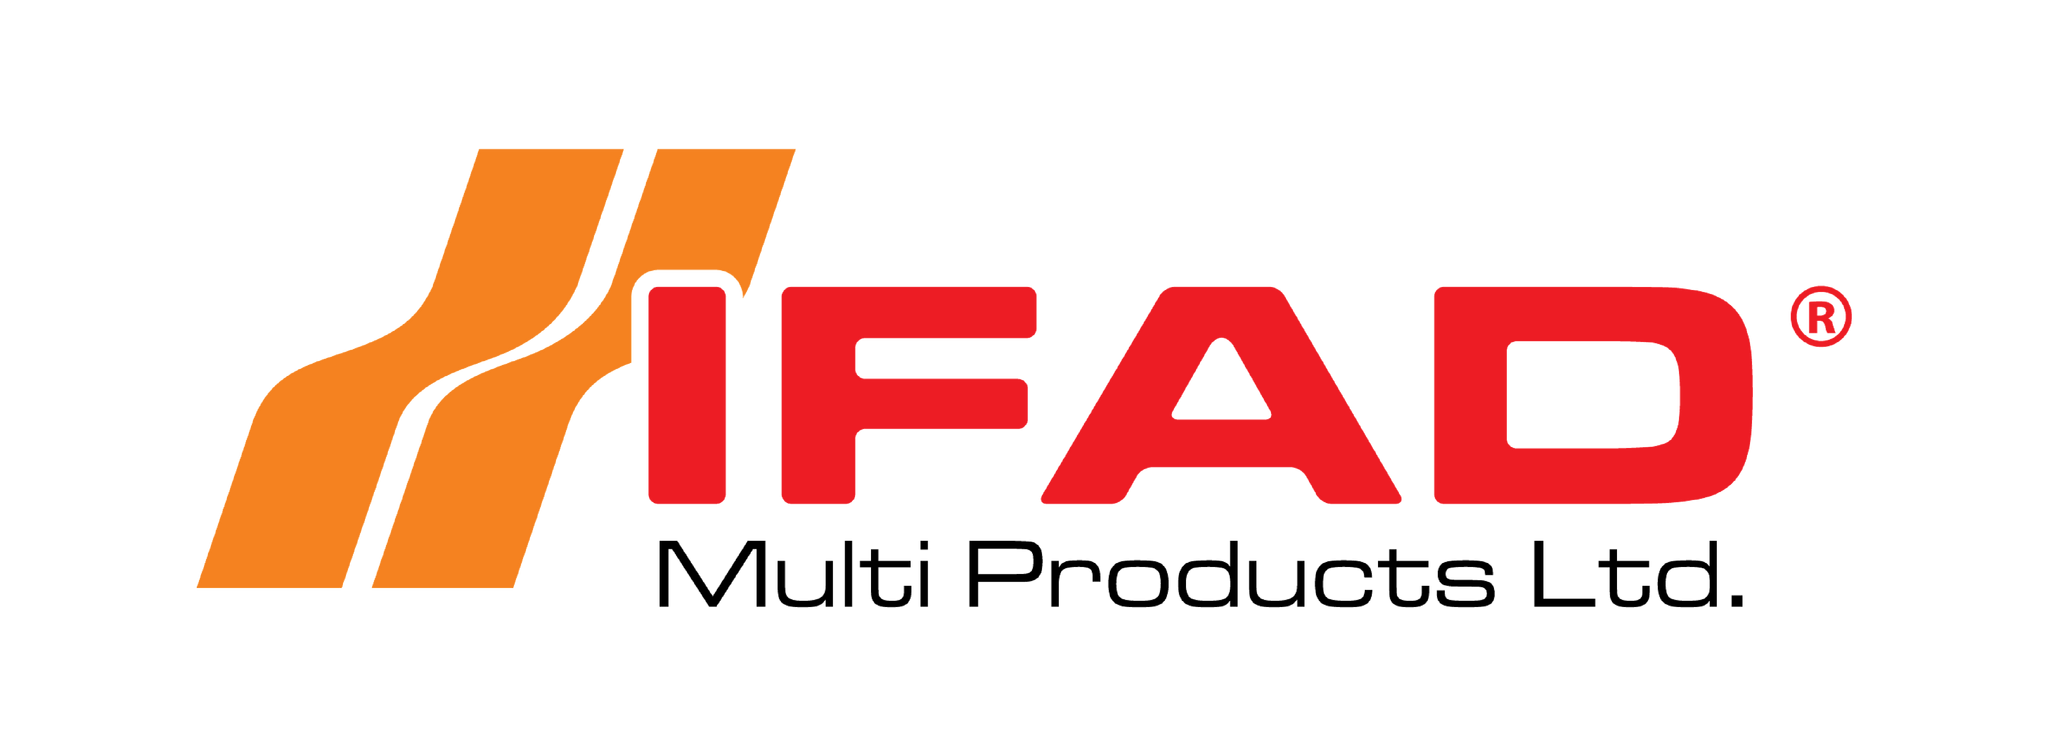 IFAD Logo - IFAD Multi Products Ltd 2019's largest annual food